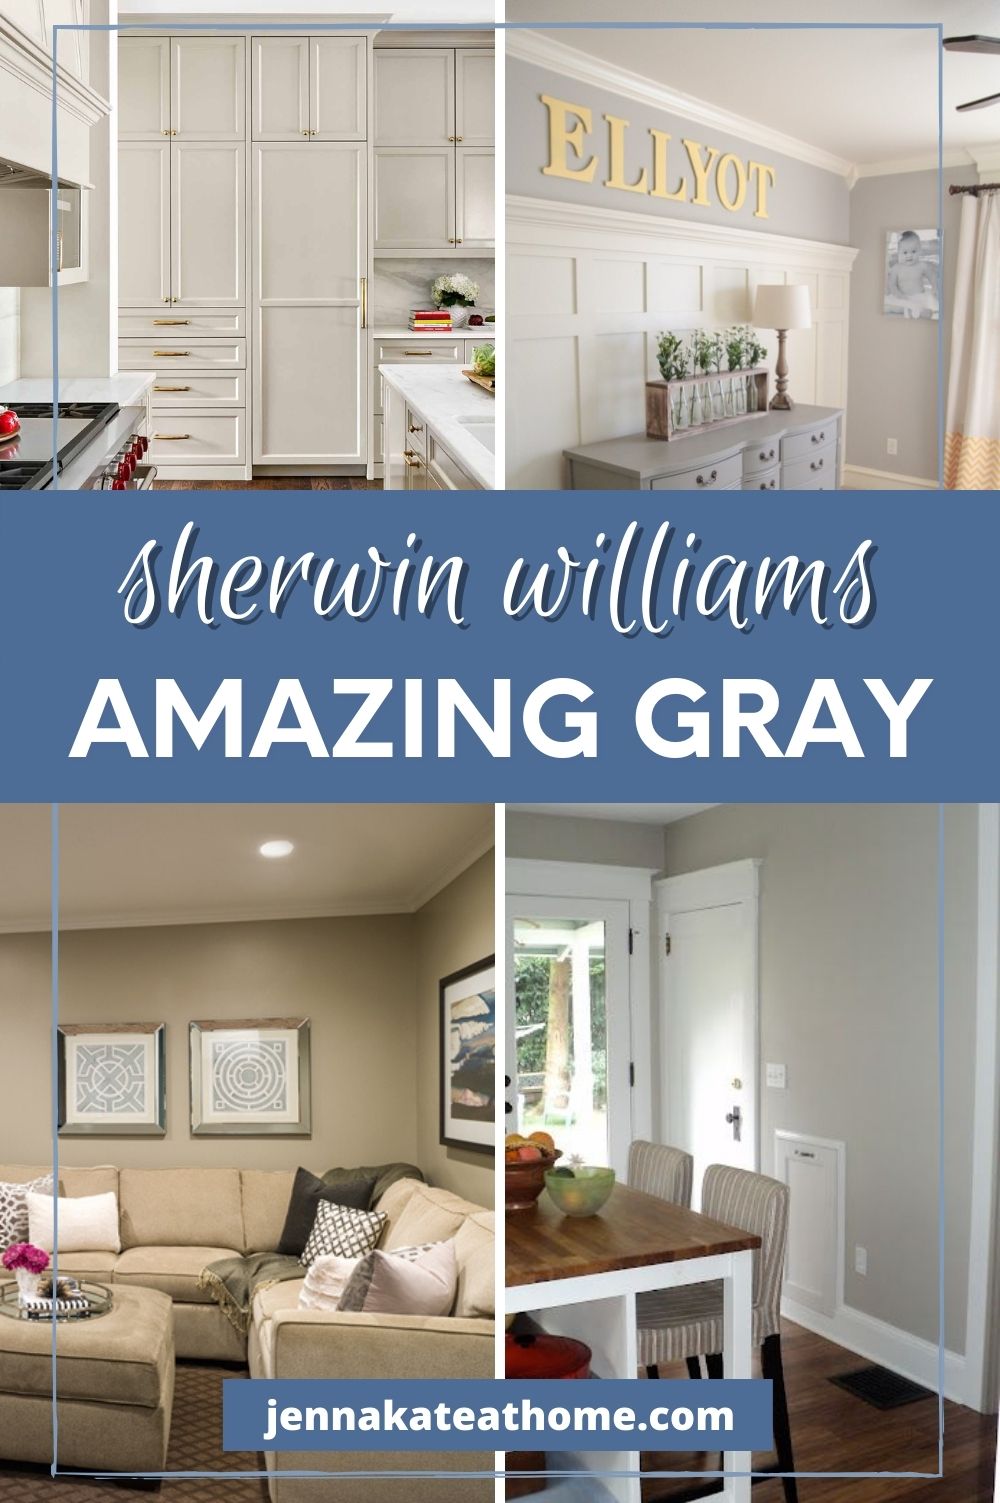 sherwin williams amazing gray pin image